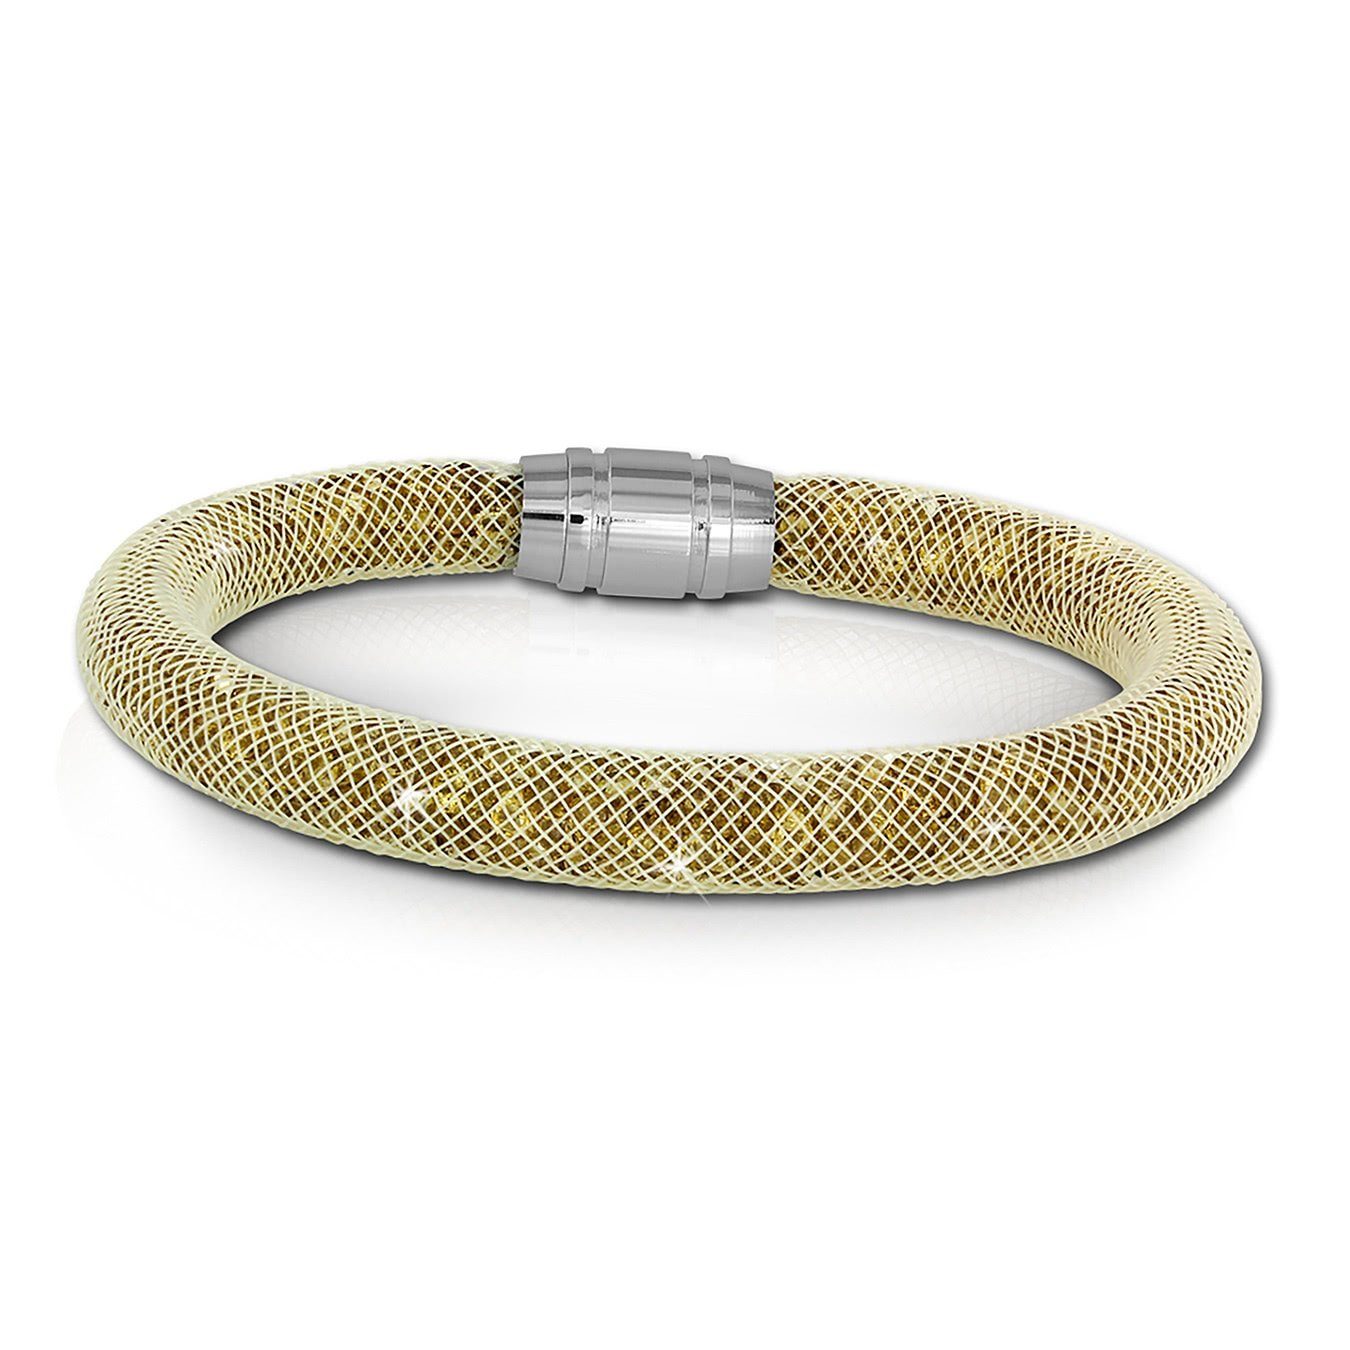 goldfarbene SilberDream Farbe: Arm-Schmuck (Armband), mit Edelstahl-Verschluss, Damenarmband Armband gold gold, Edelstahlarmband SilberDream